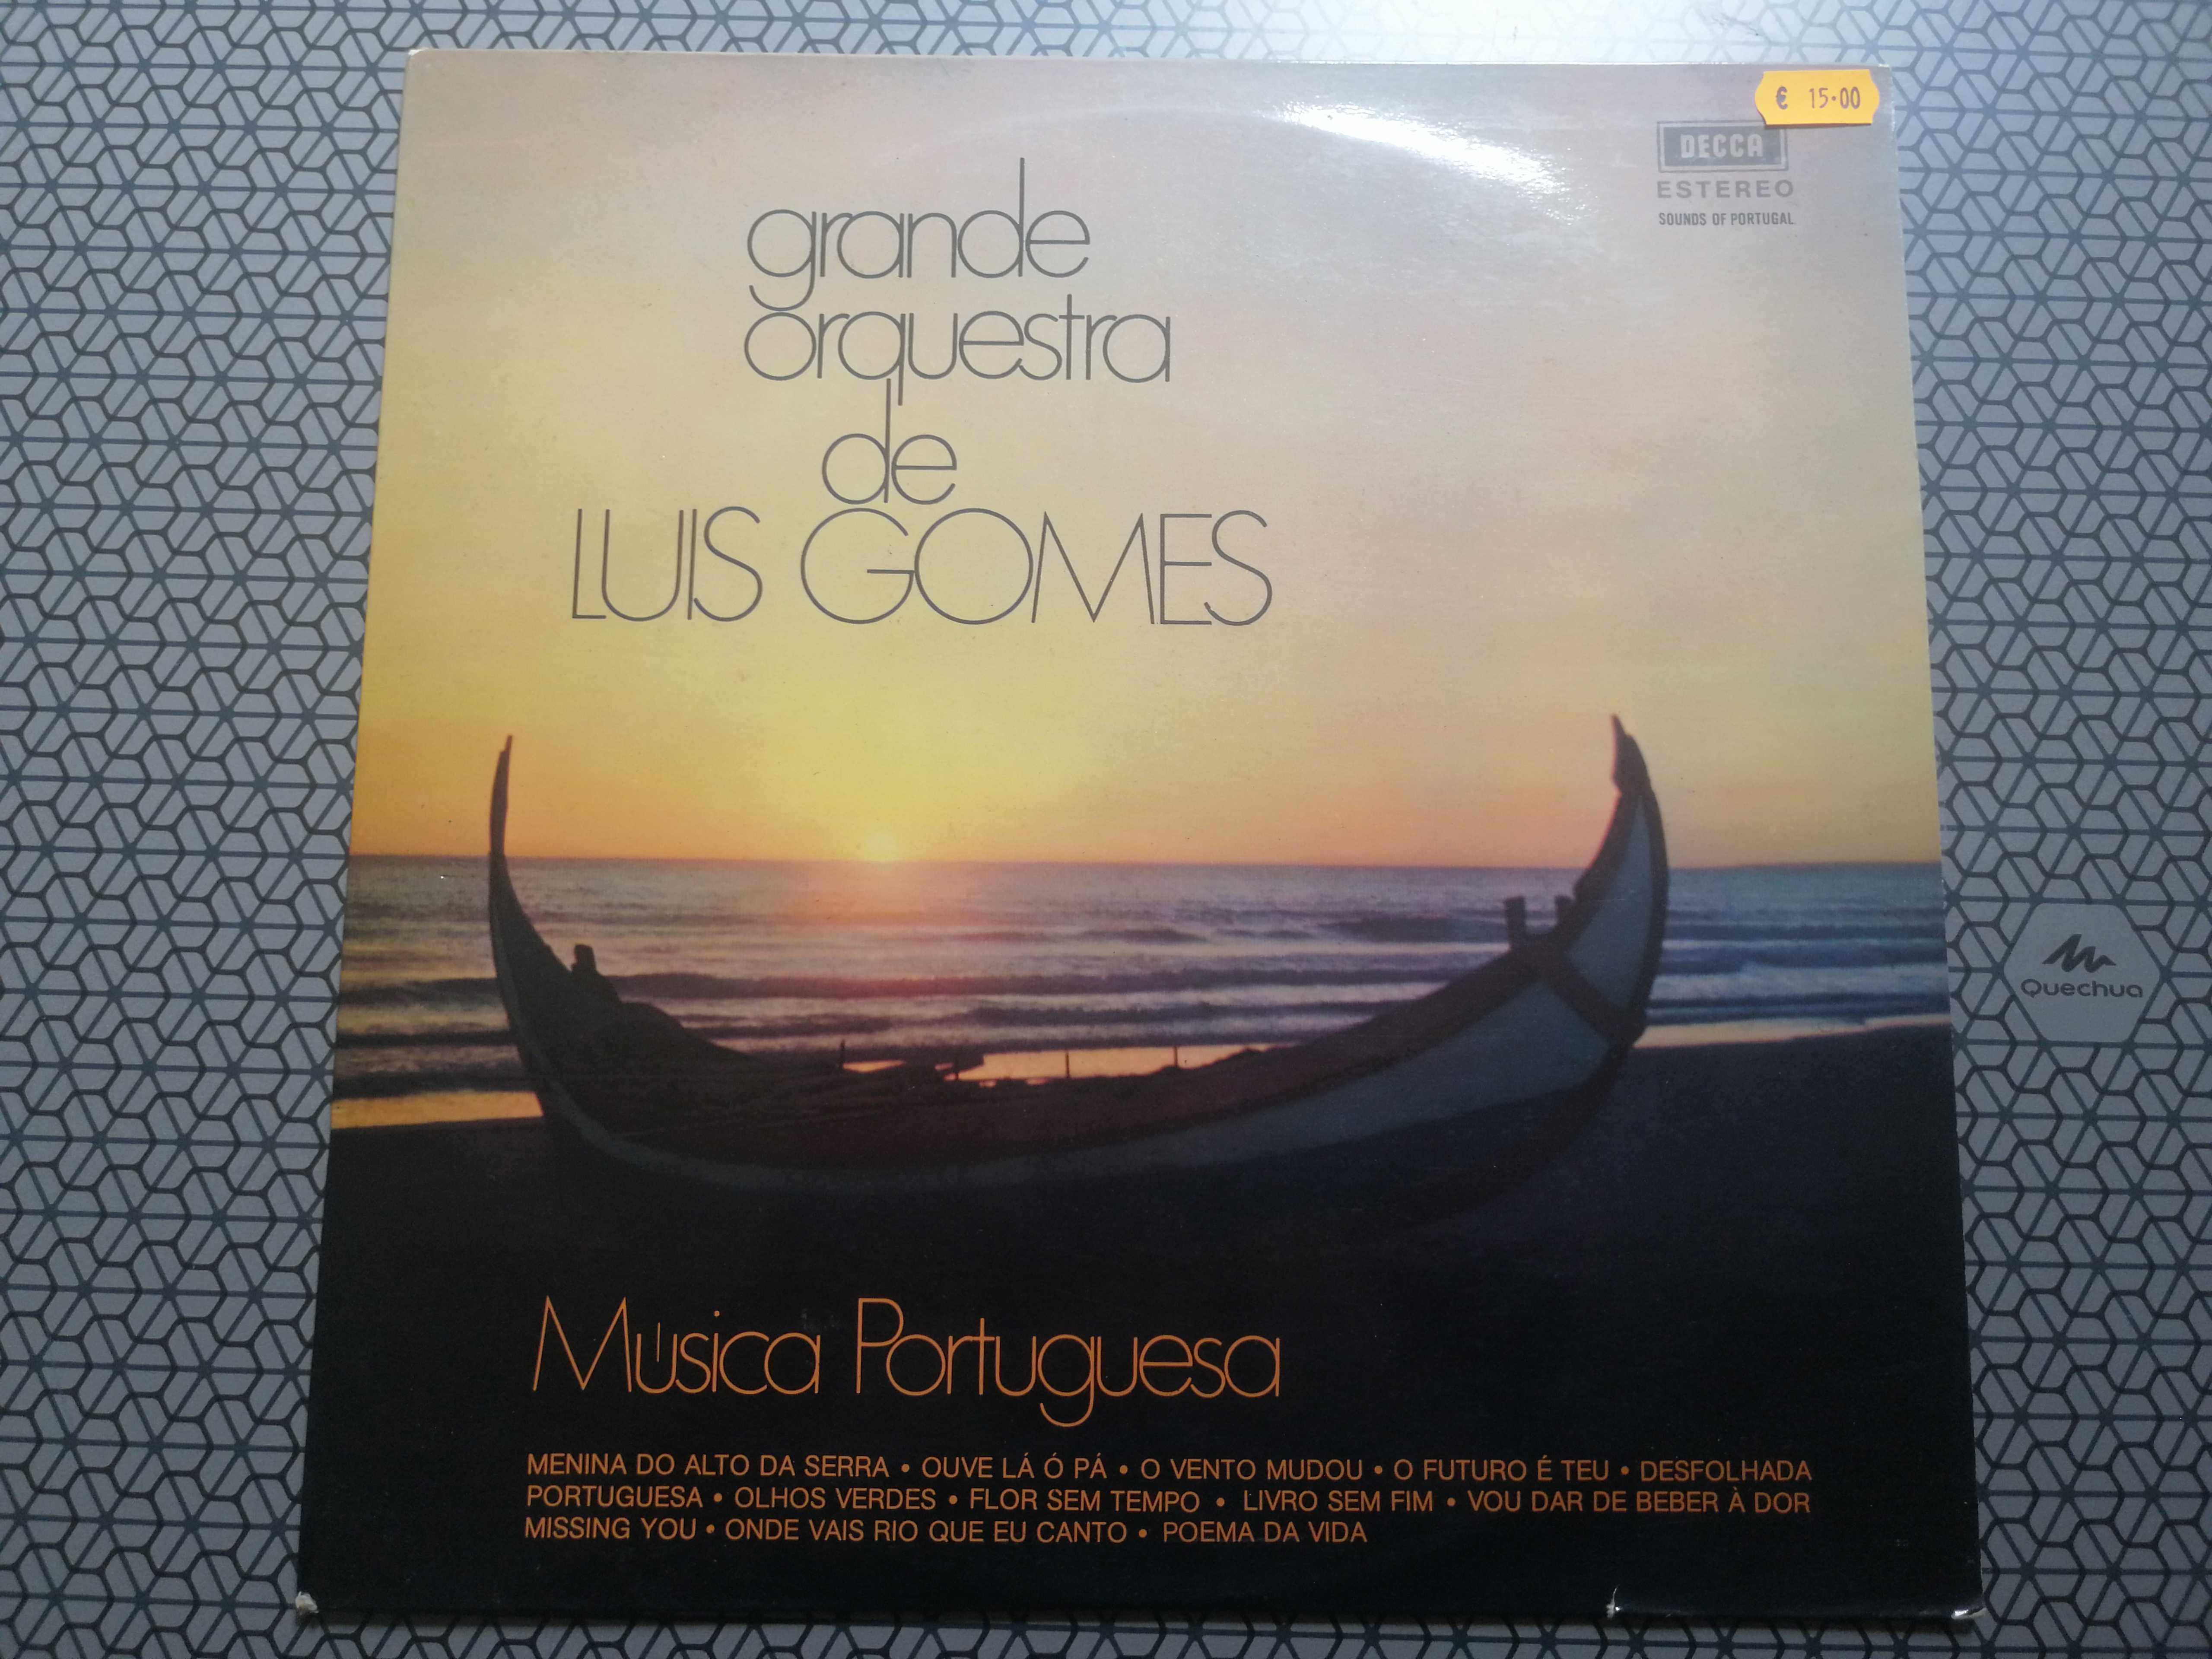 Disco Vinil Grande Orquestra de Luis Gomes - Música Portuguesa.